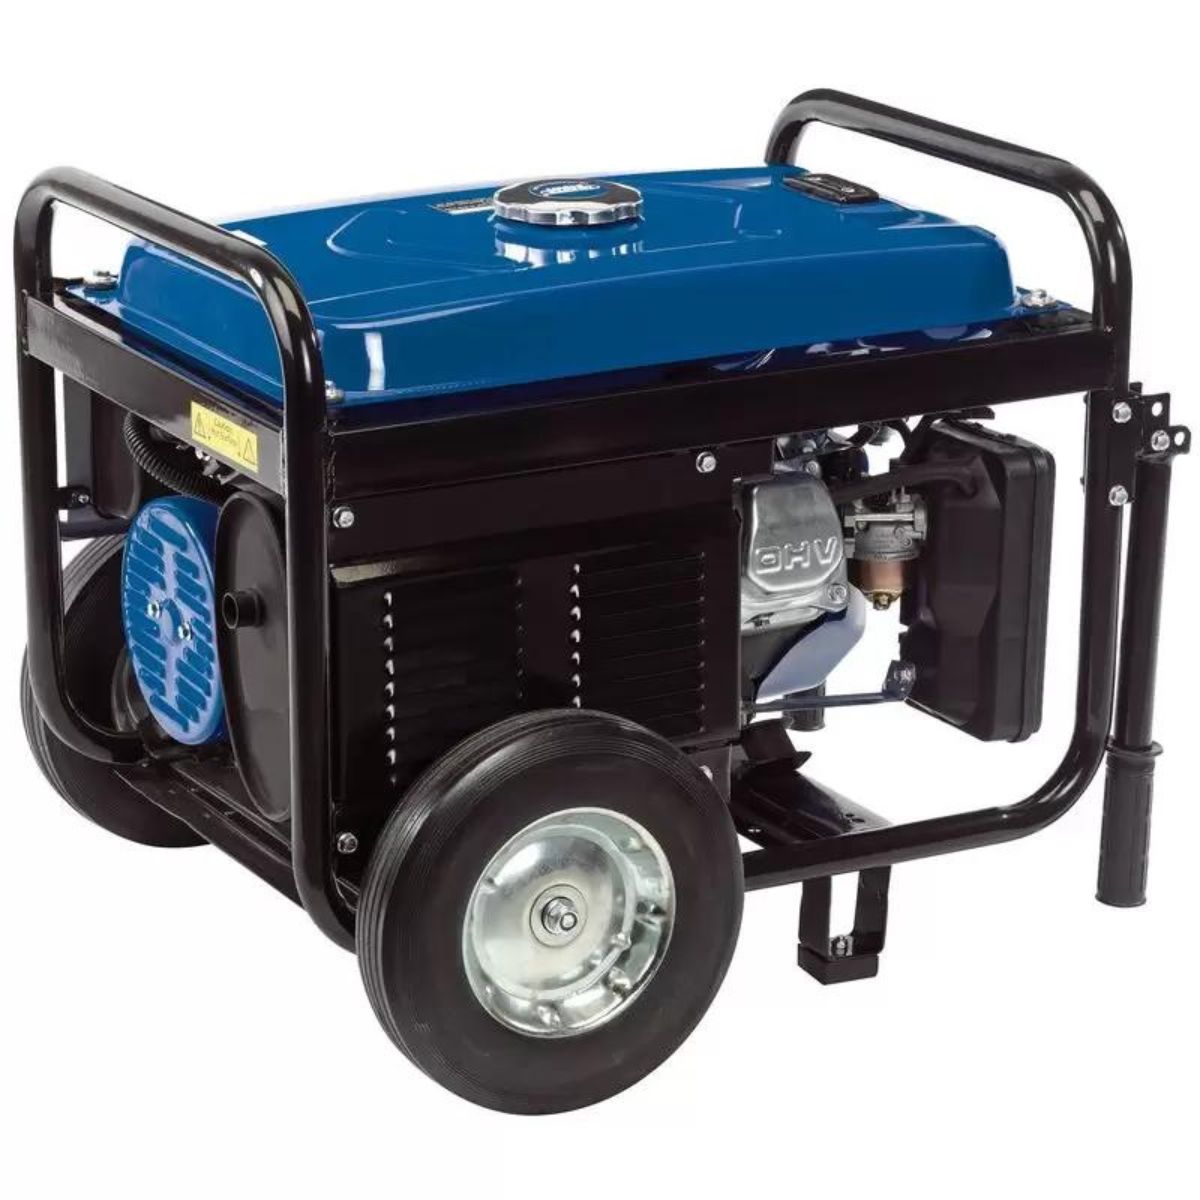 Draper Expert PG28W Petrol Generator with Wheels 230V/2500W 87088